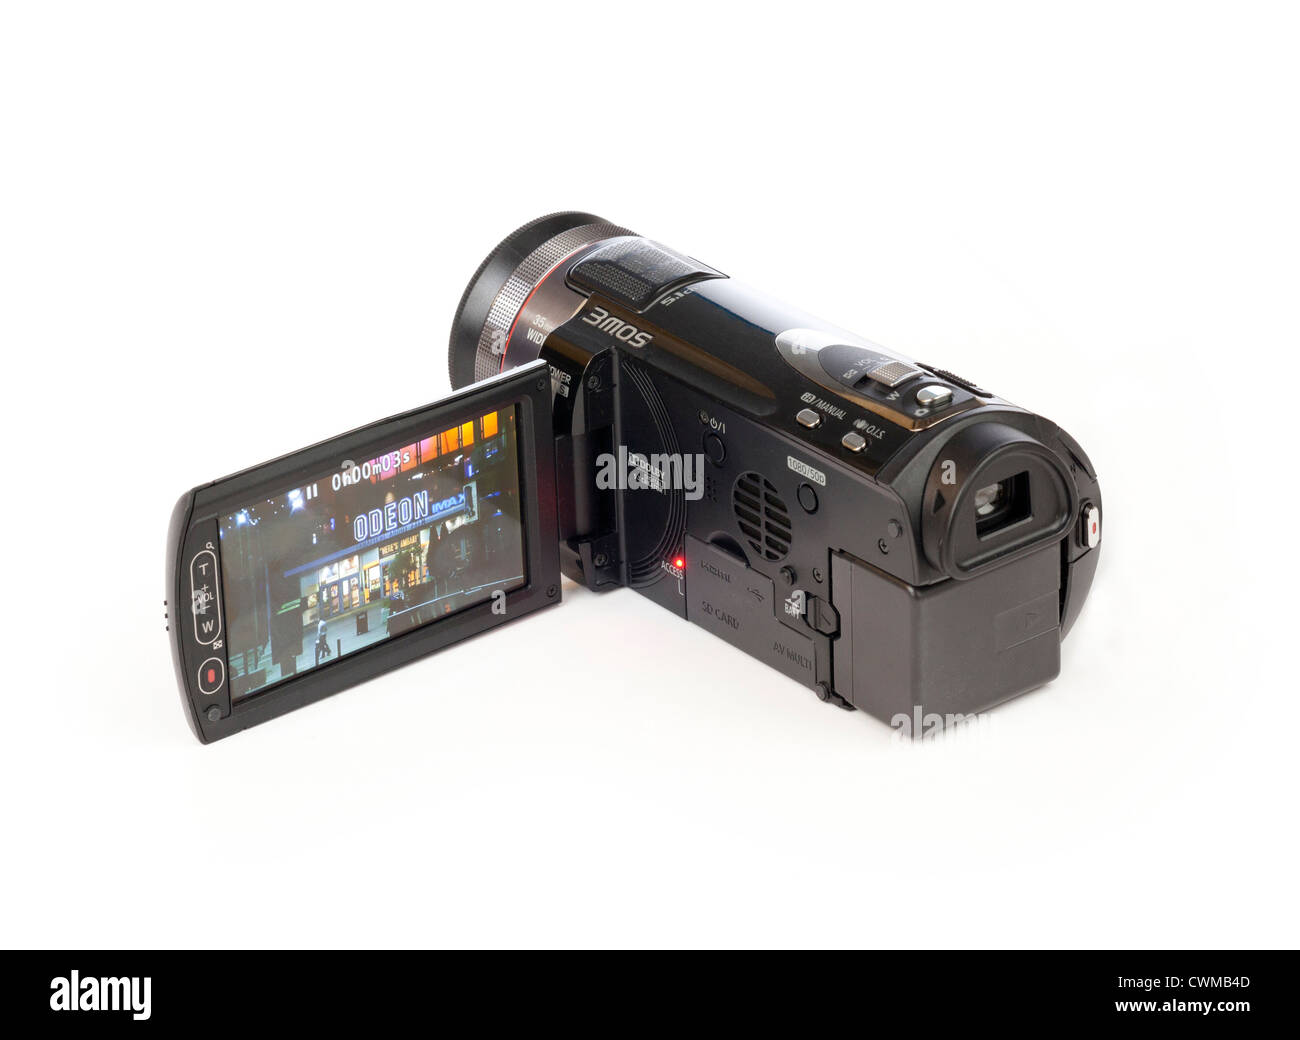 Panasonic SD900 high definition camcorder Stock Photo